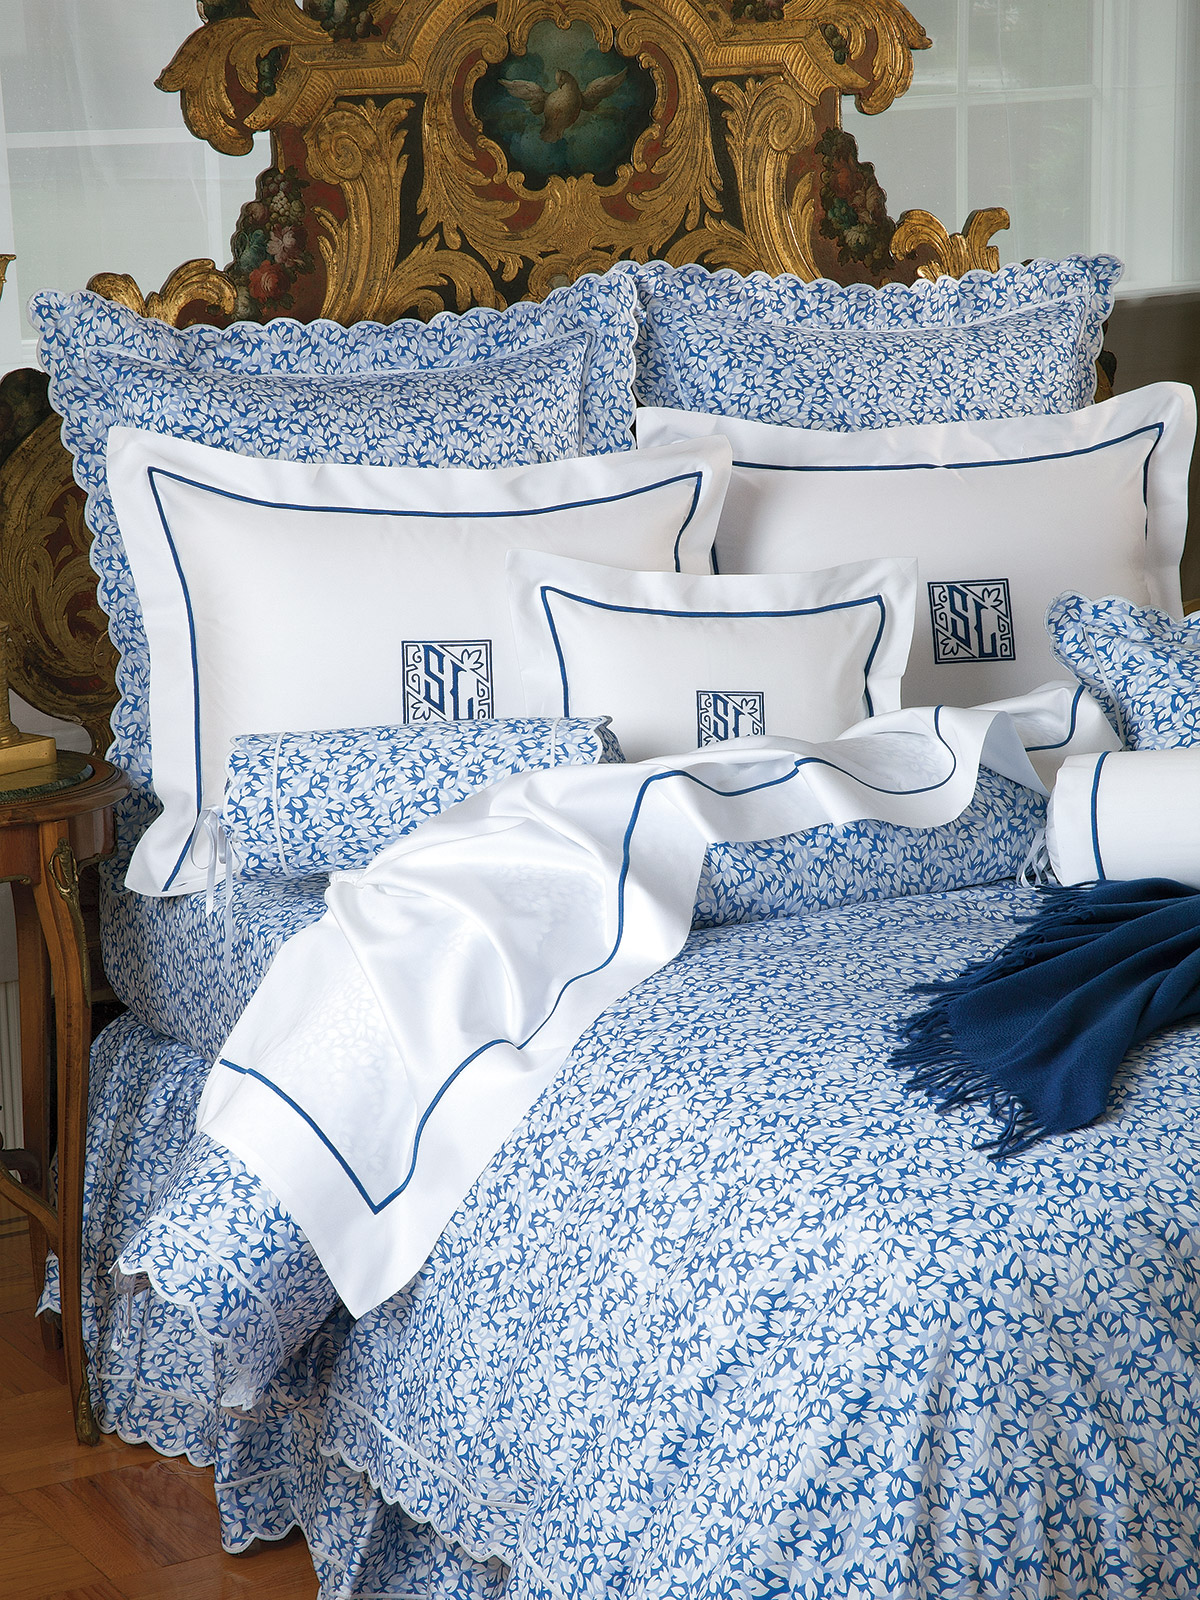  image of a Vanderbilt bed linens